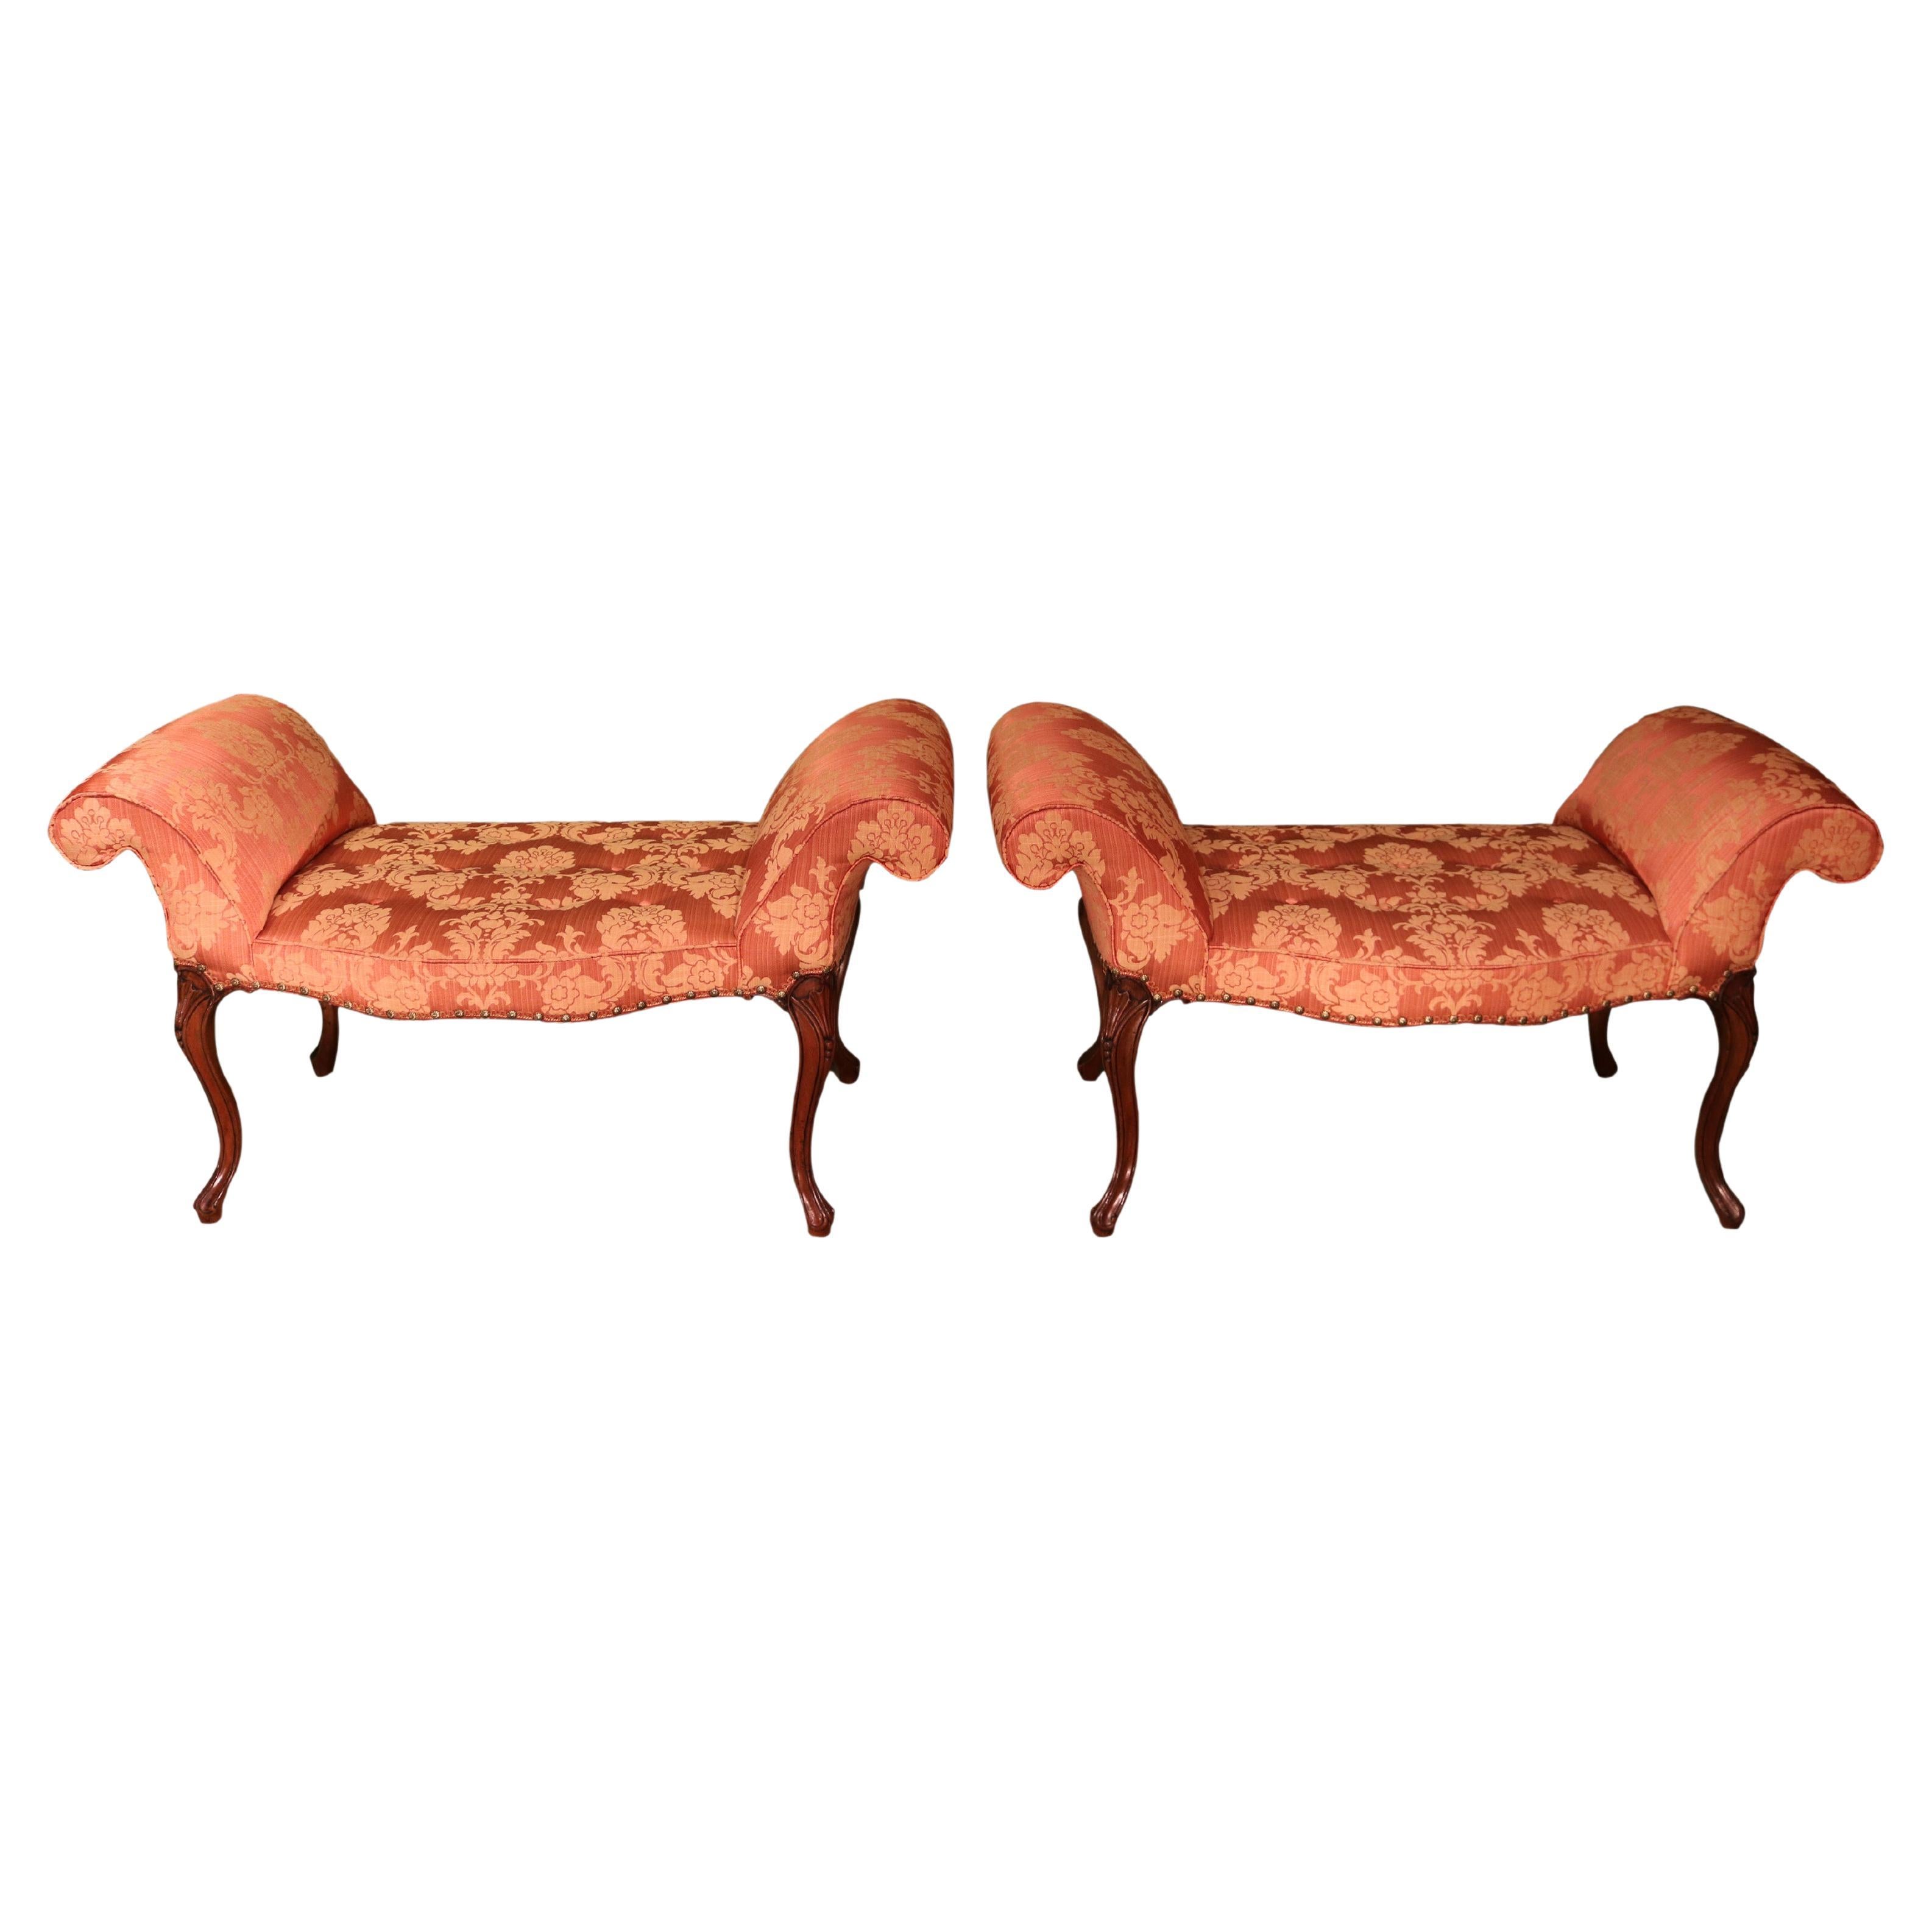 Antique pair of Hepplewhite period mahogany window seats